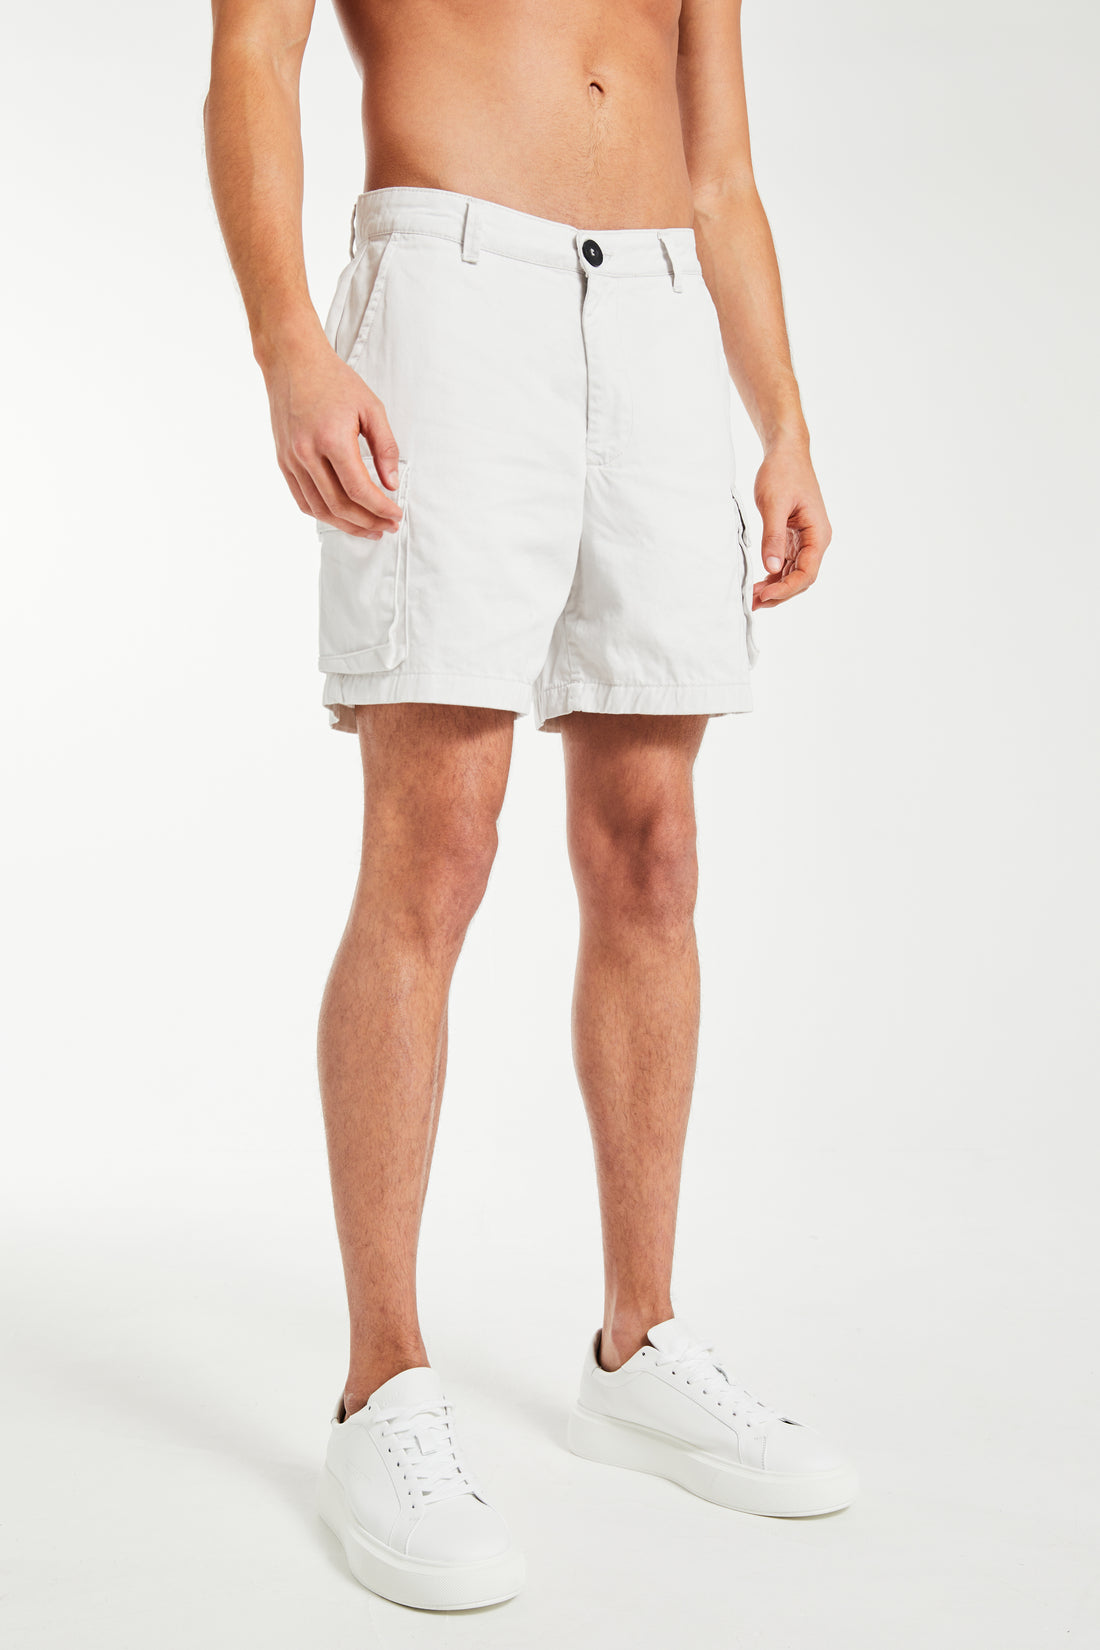 model wearing white men's utility shorts